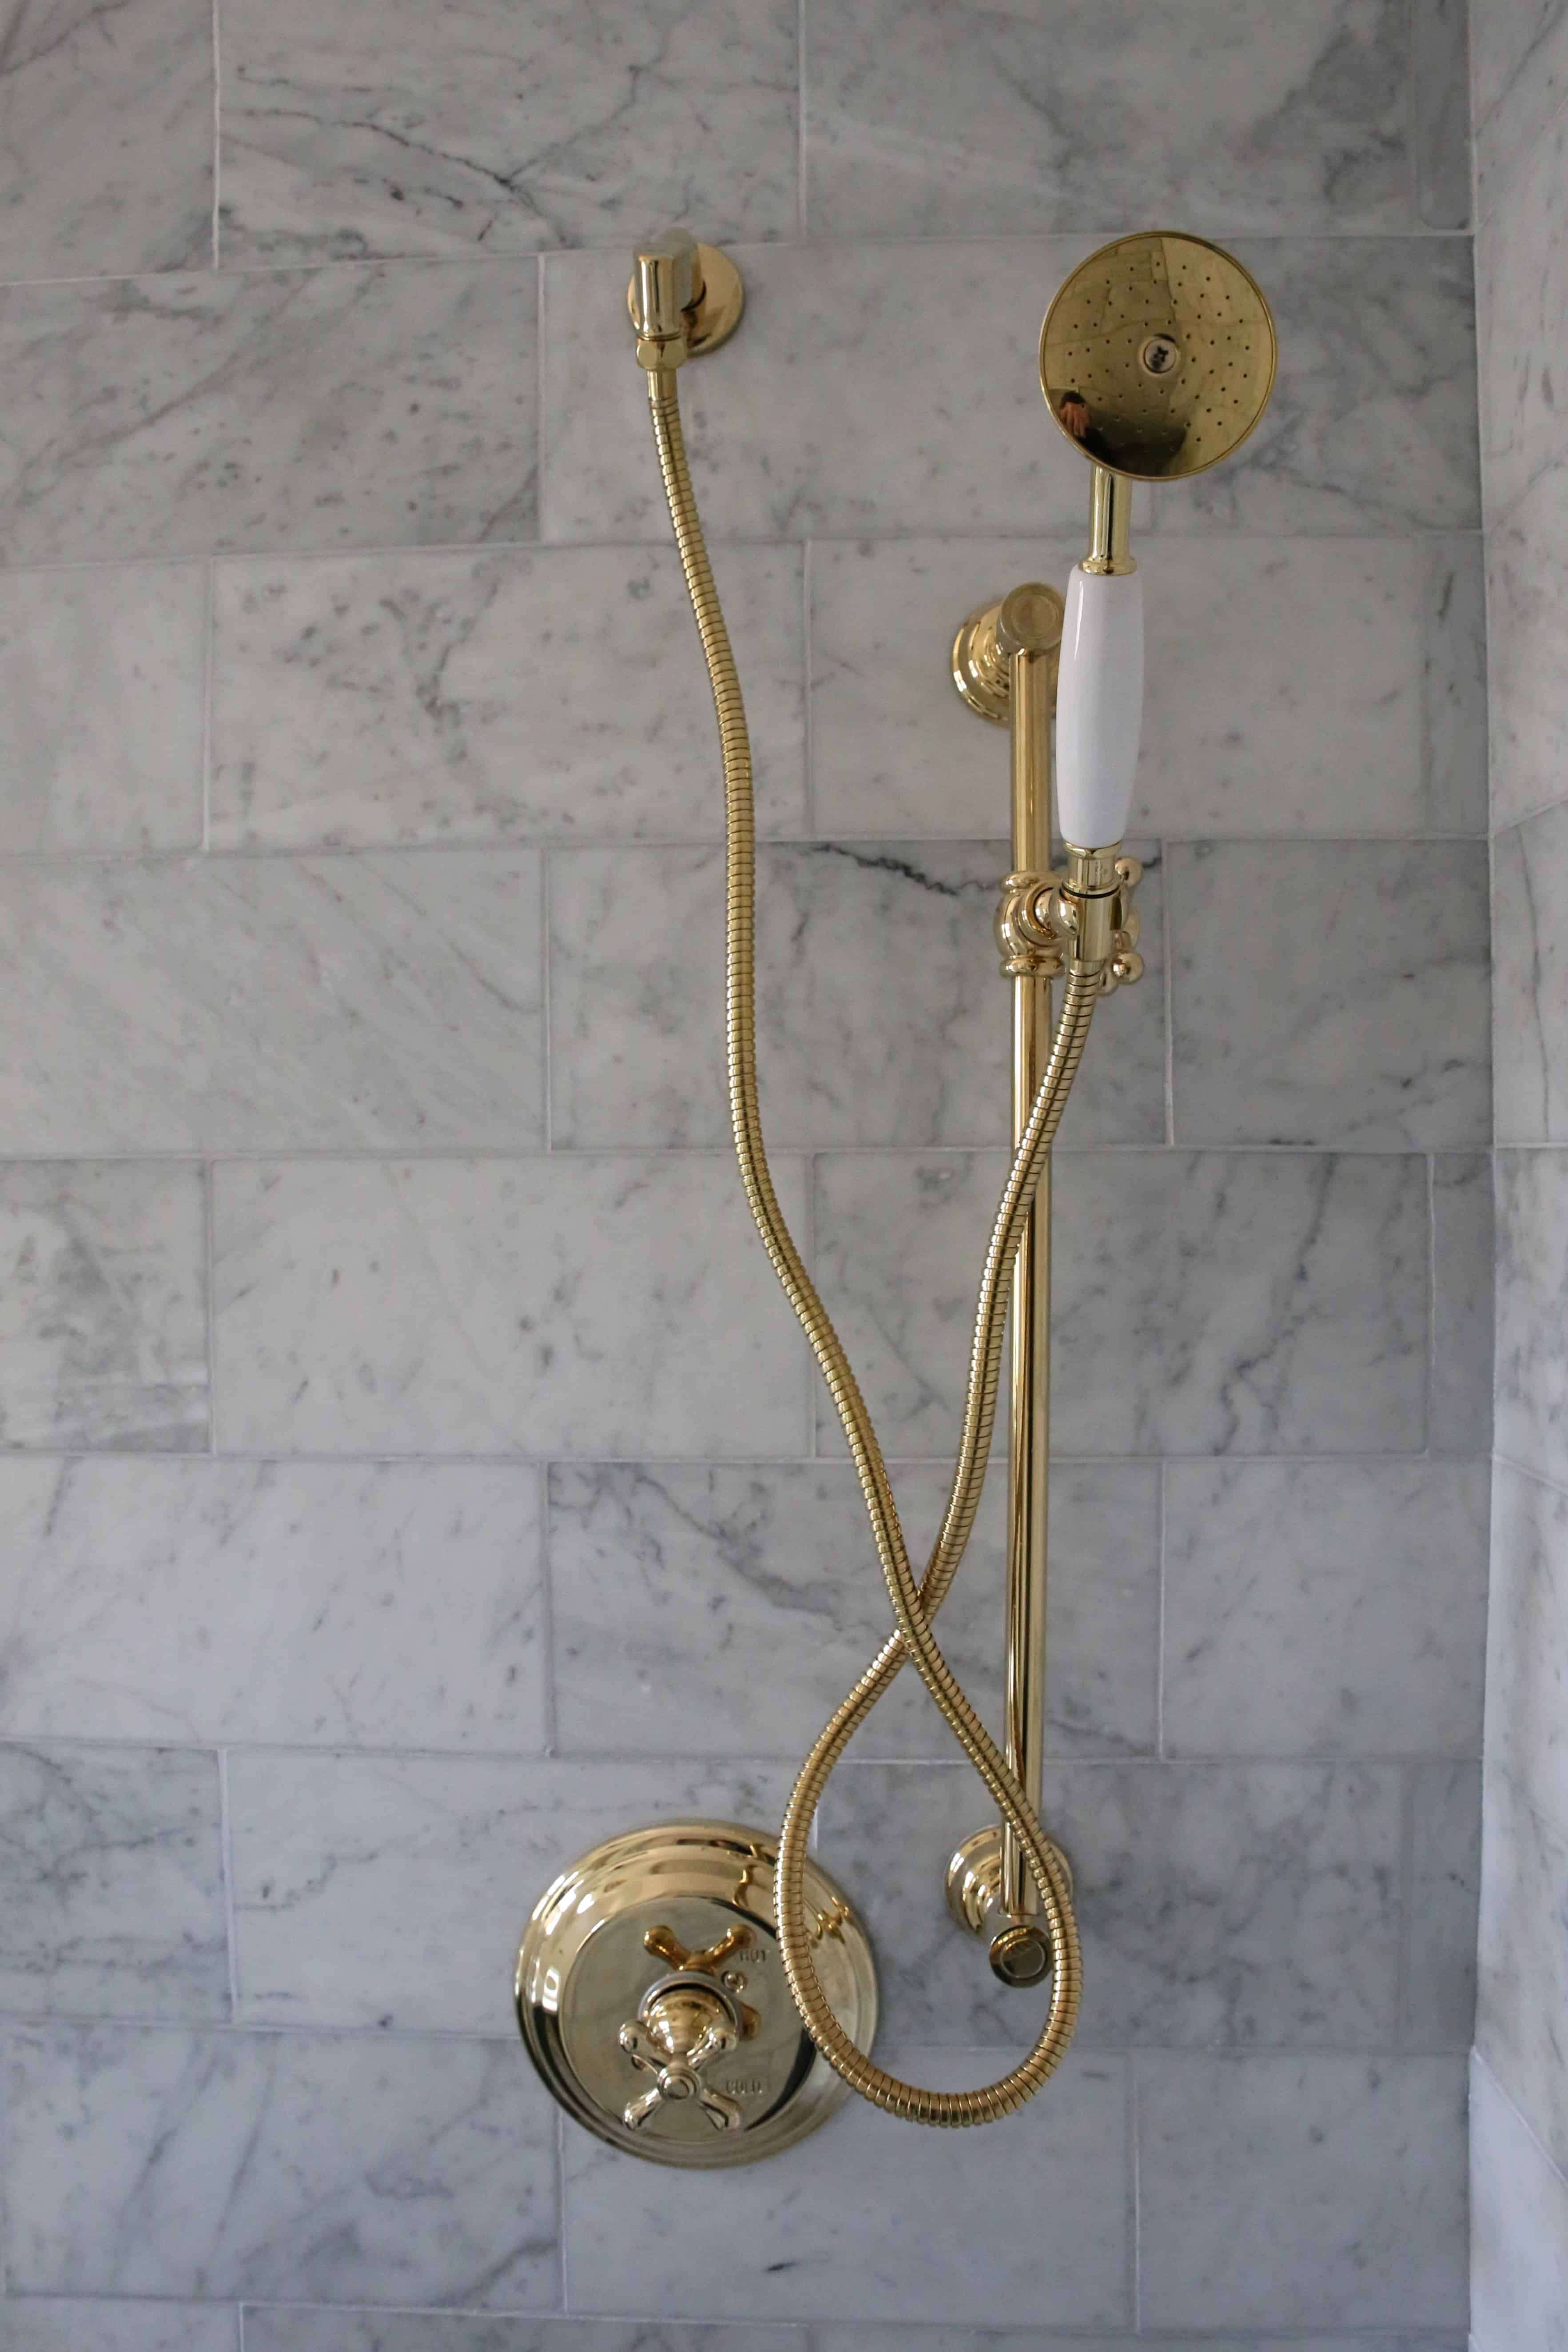 luxe-parisian-master-bathroom-renovation-a-glass-of-bovino